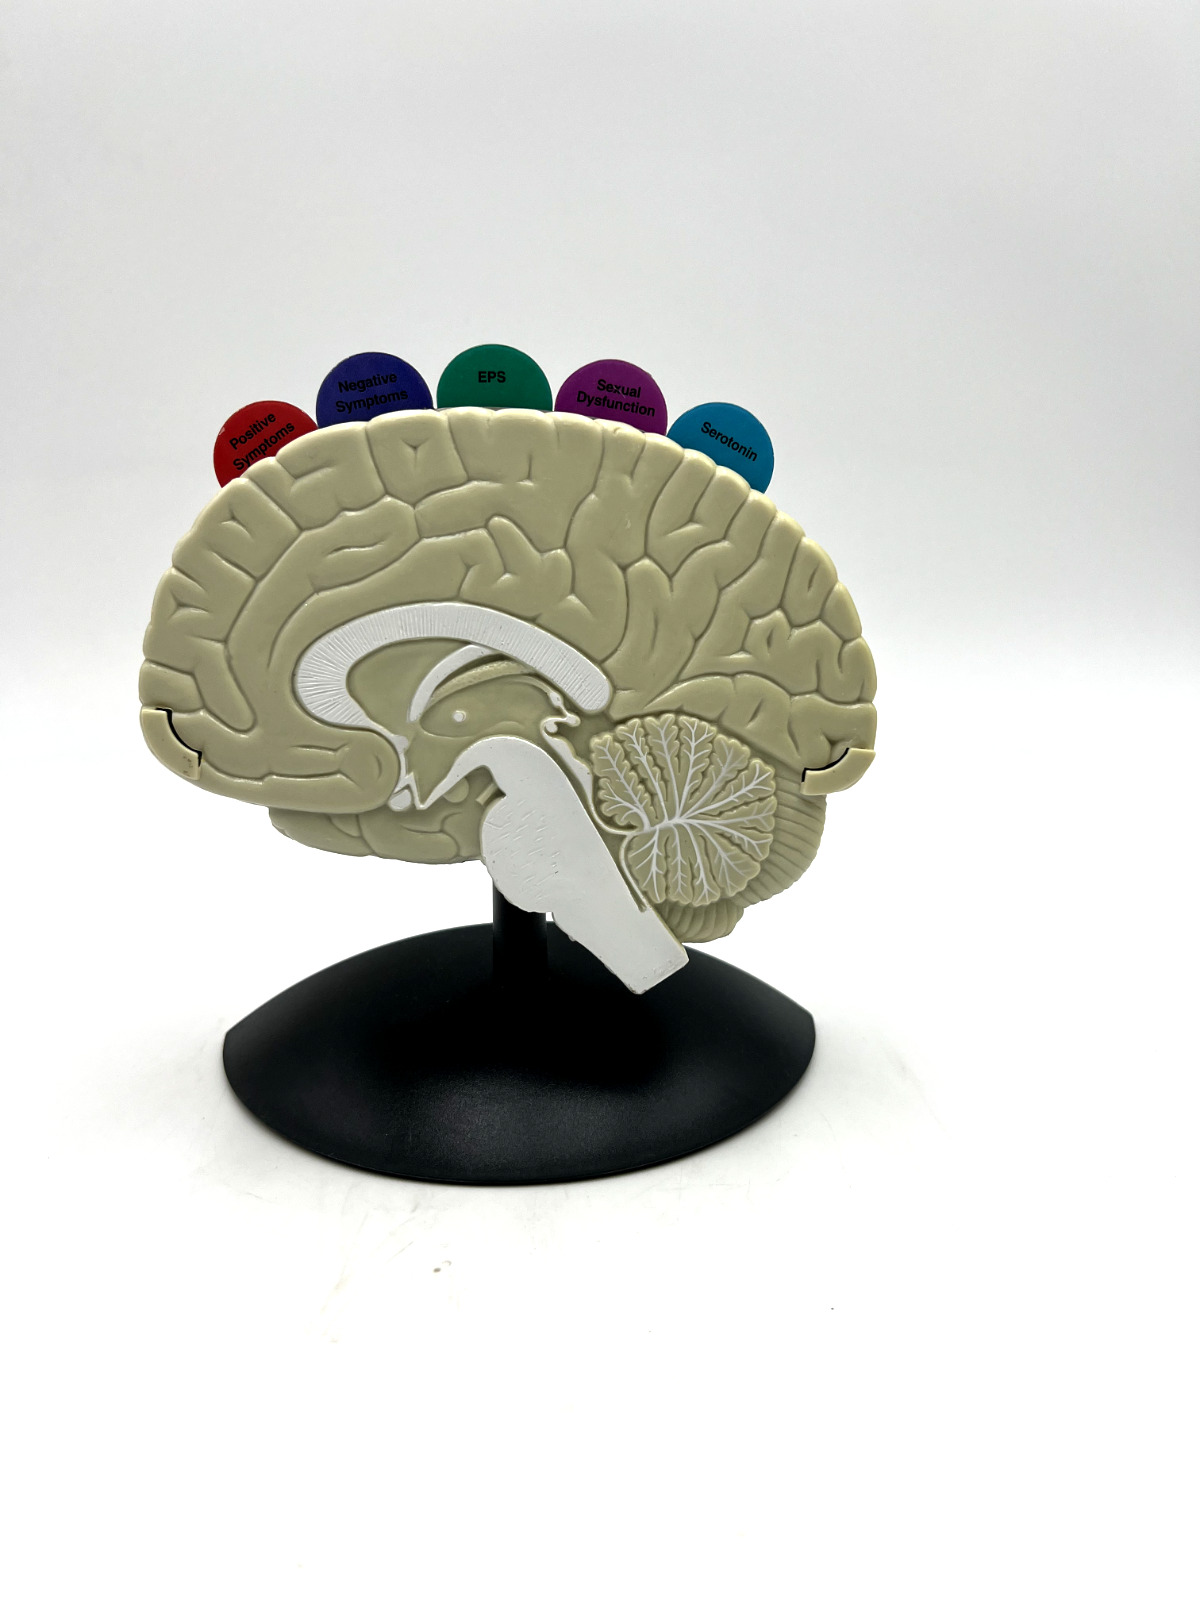 Geodon Brain Anatomical Model - Pharmaceutical Collectible - PFIZER 2002